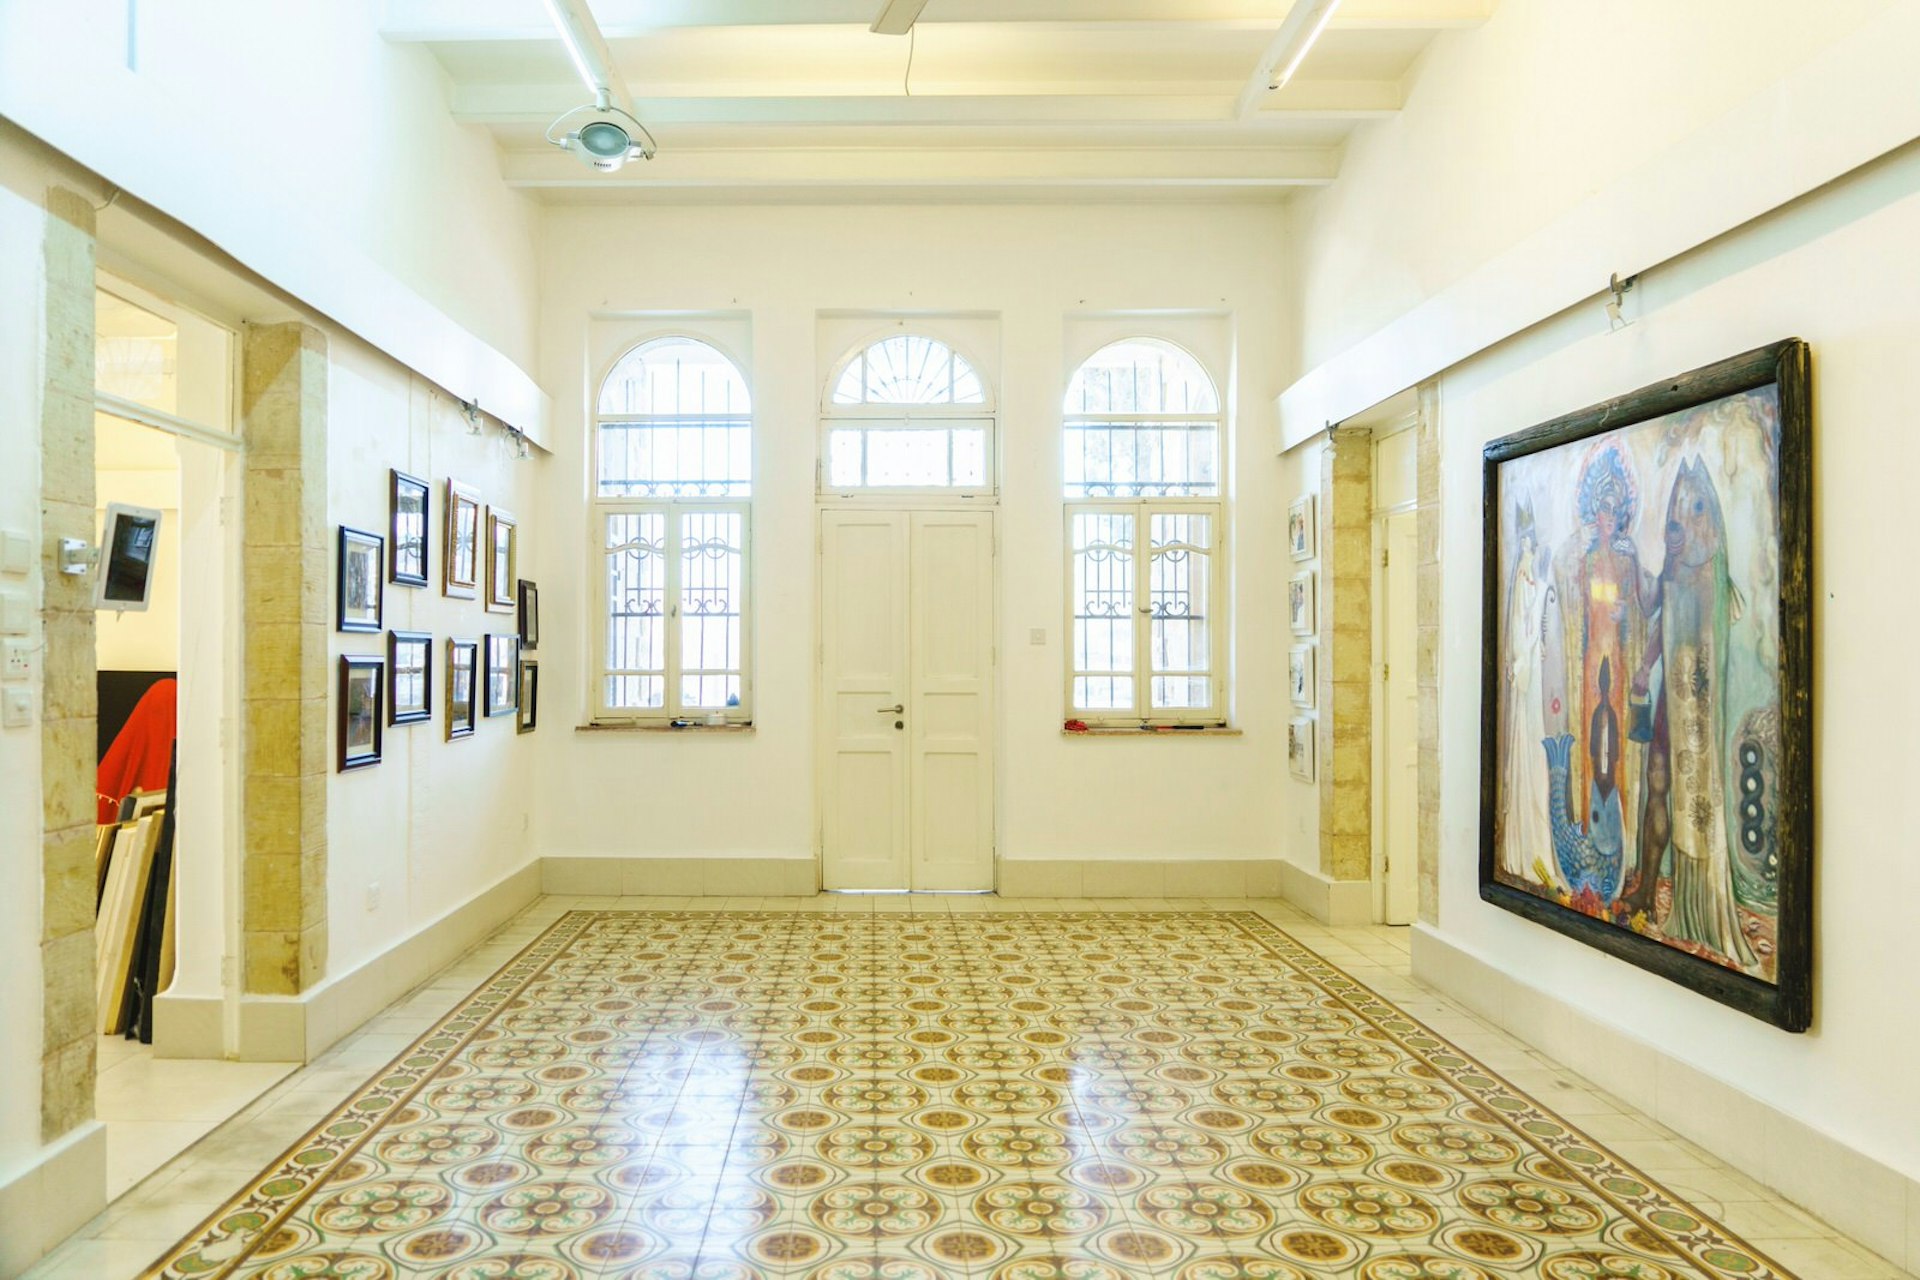 Corridor in Dar Al-Anda art gallery in Amman, Jordan. Image by Yulia Denisyuk / Lonely Planet